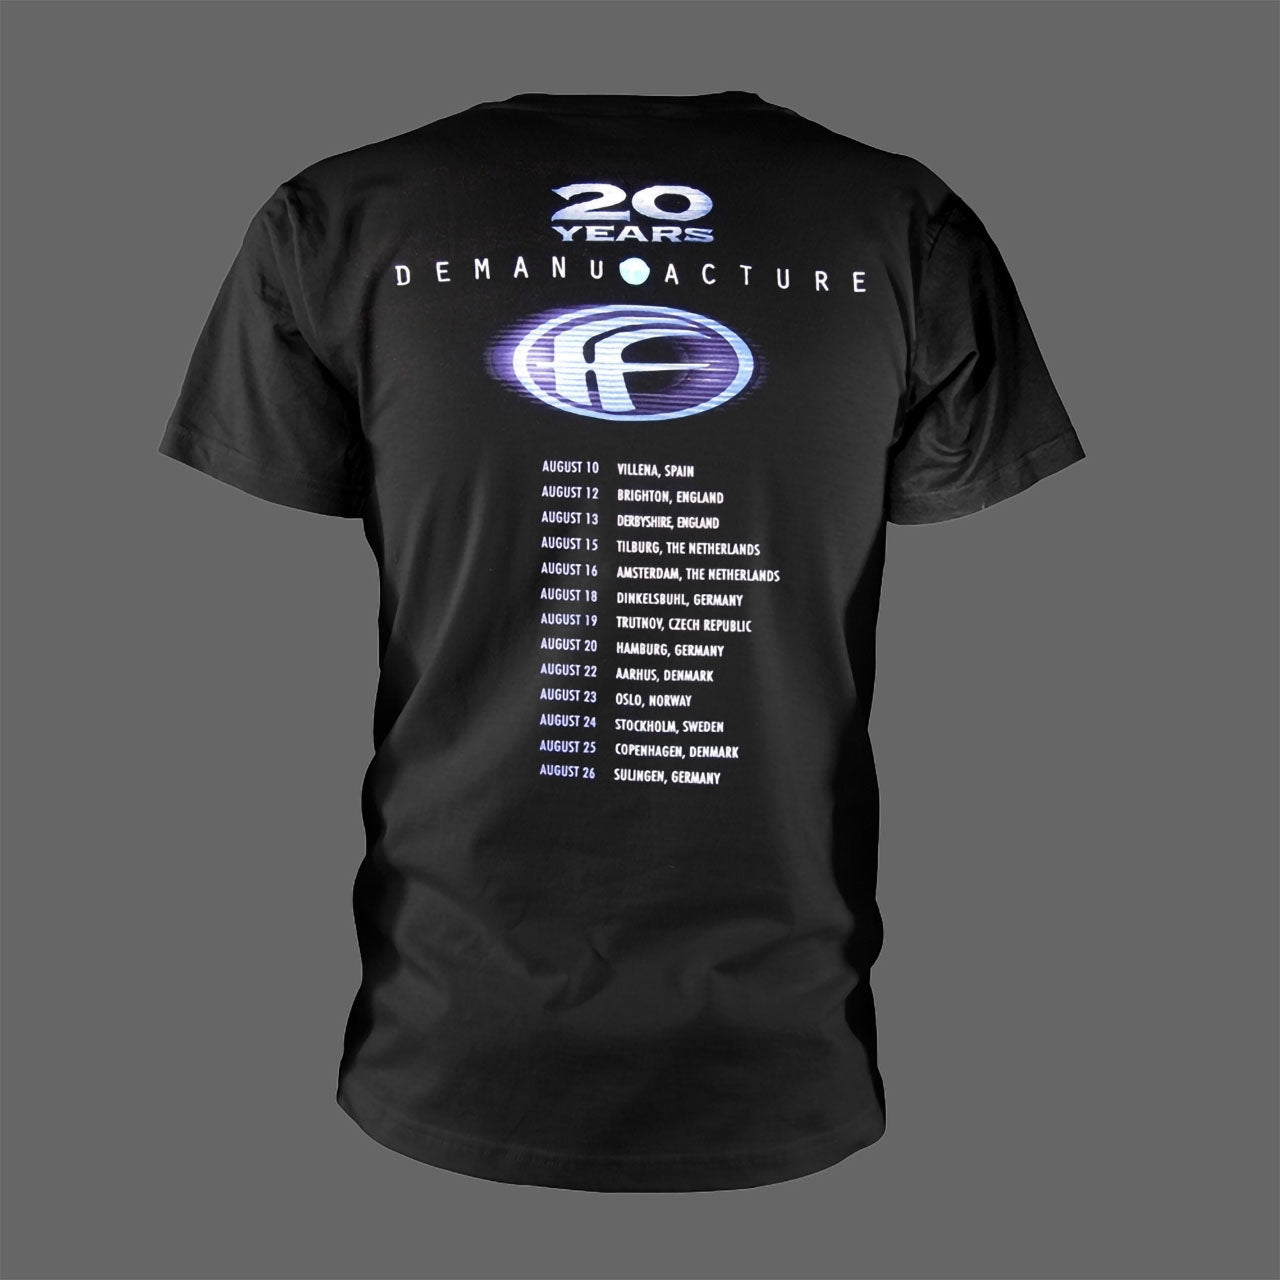 Fear Factory - Demanufacture 20th Anniversary Tour (T-Shirt)